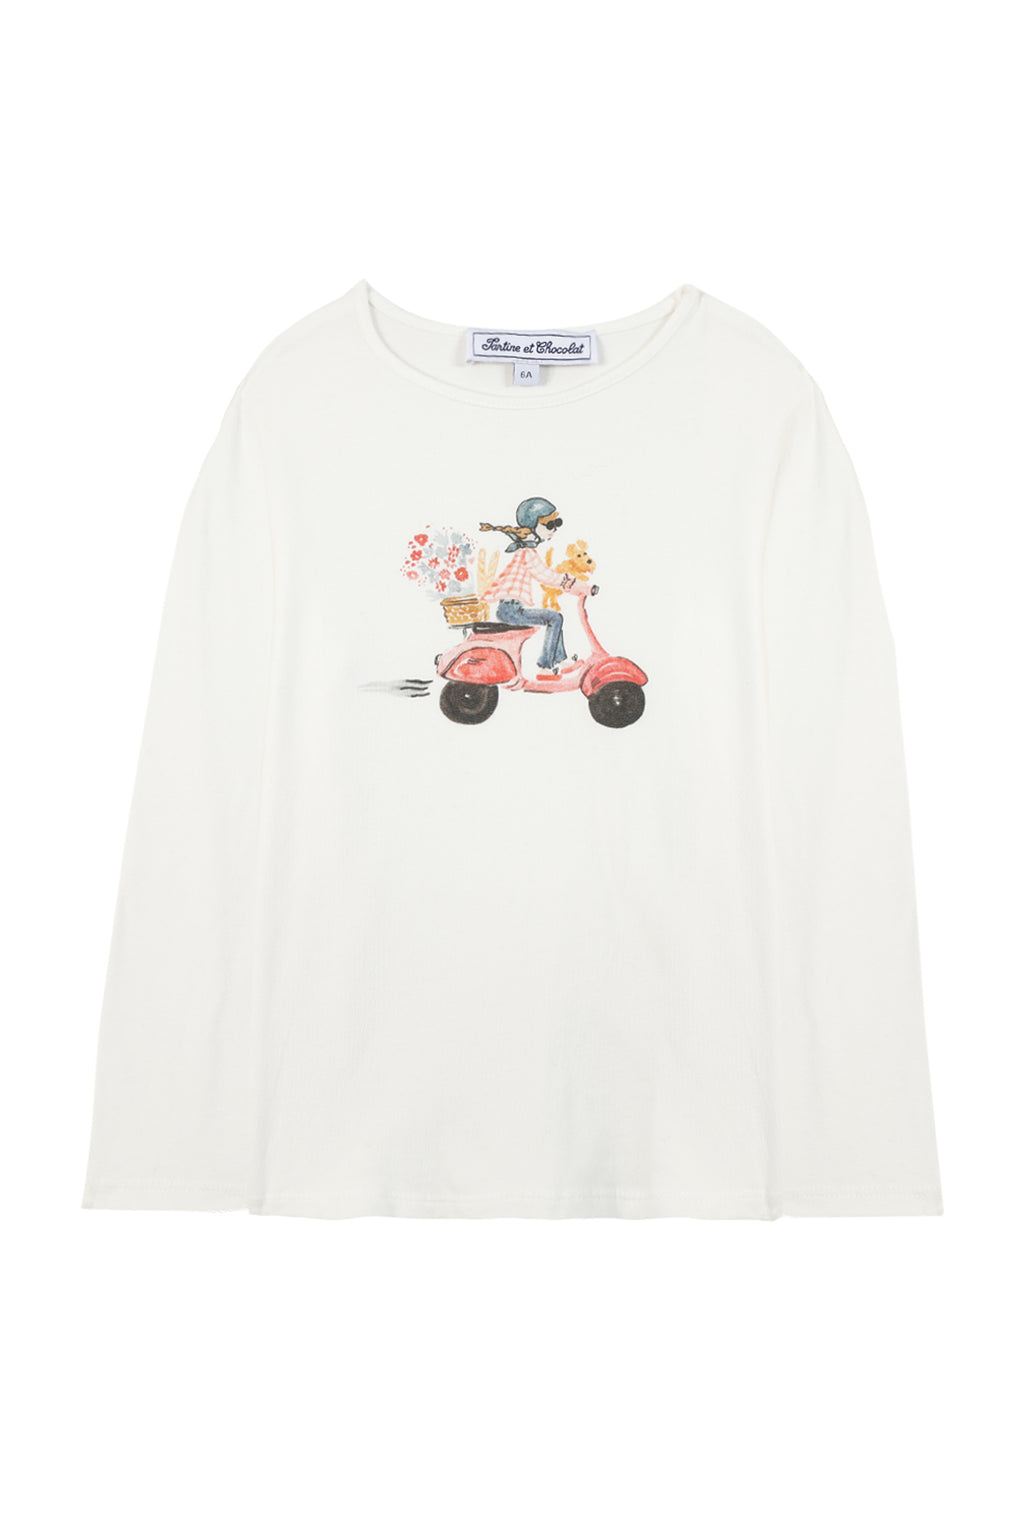 T-shirt - Illustration raspberry scooter